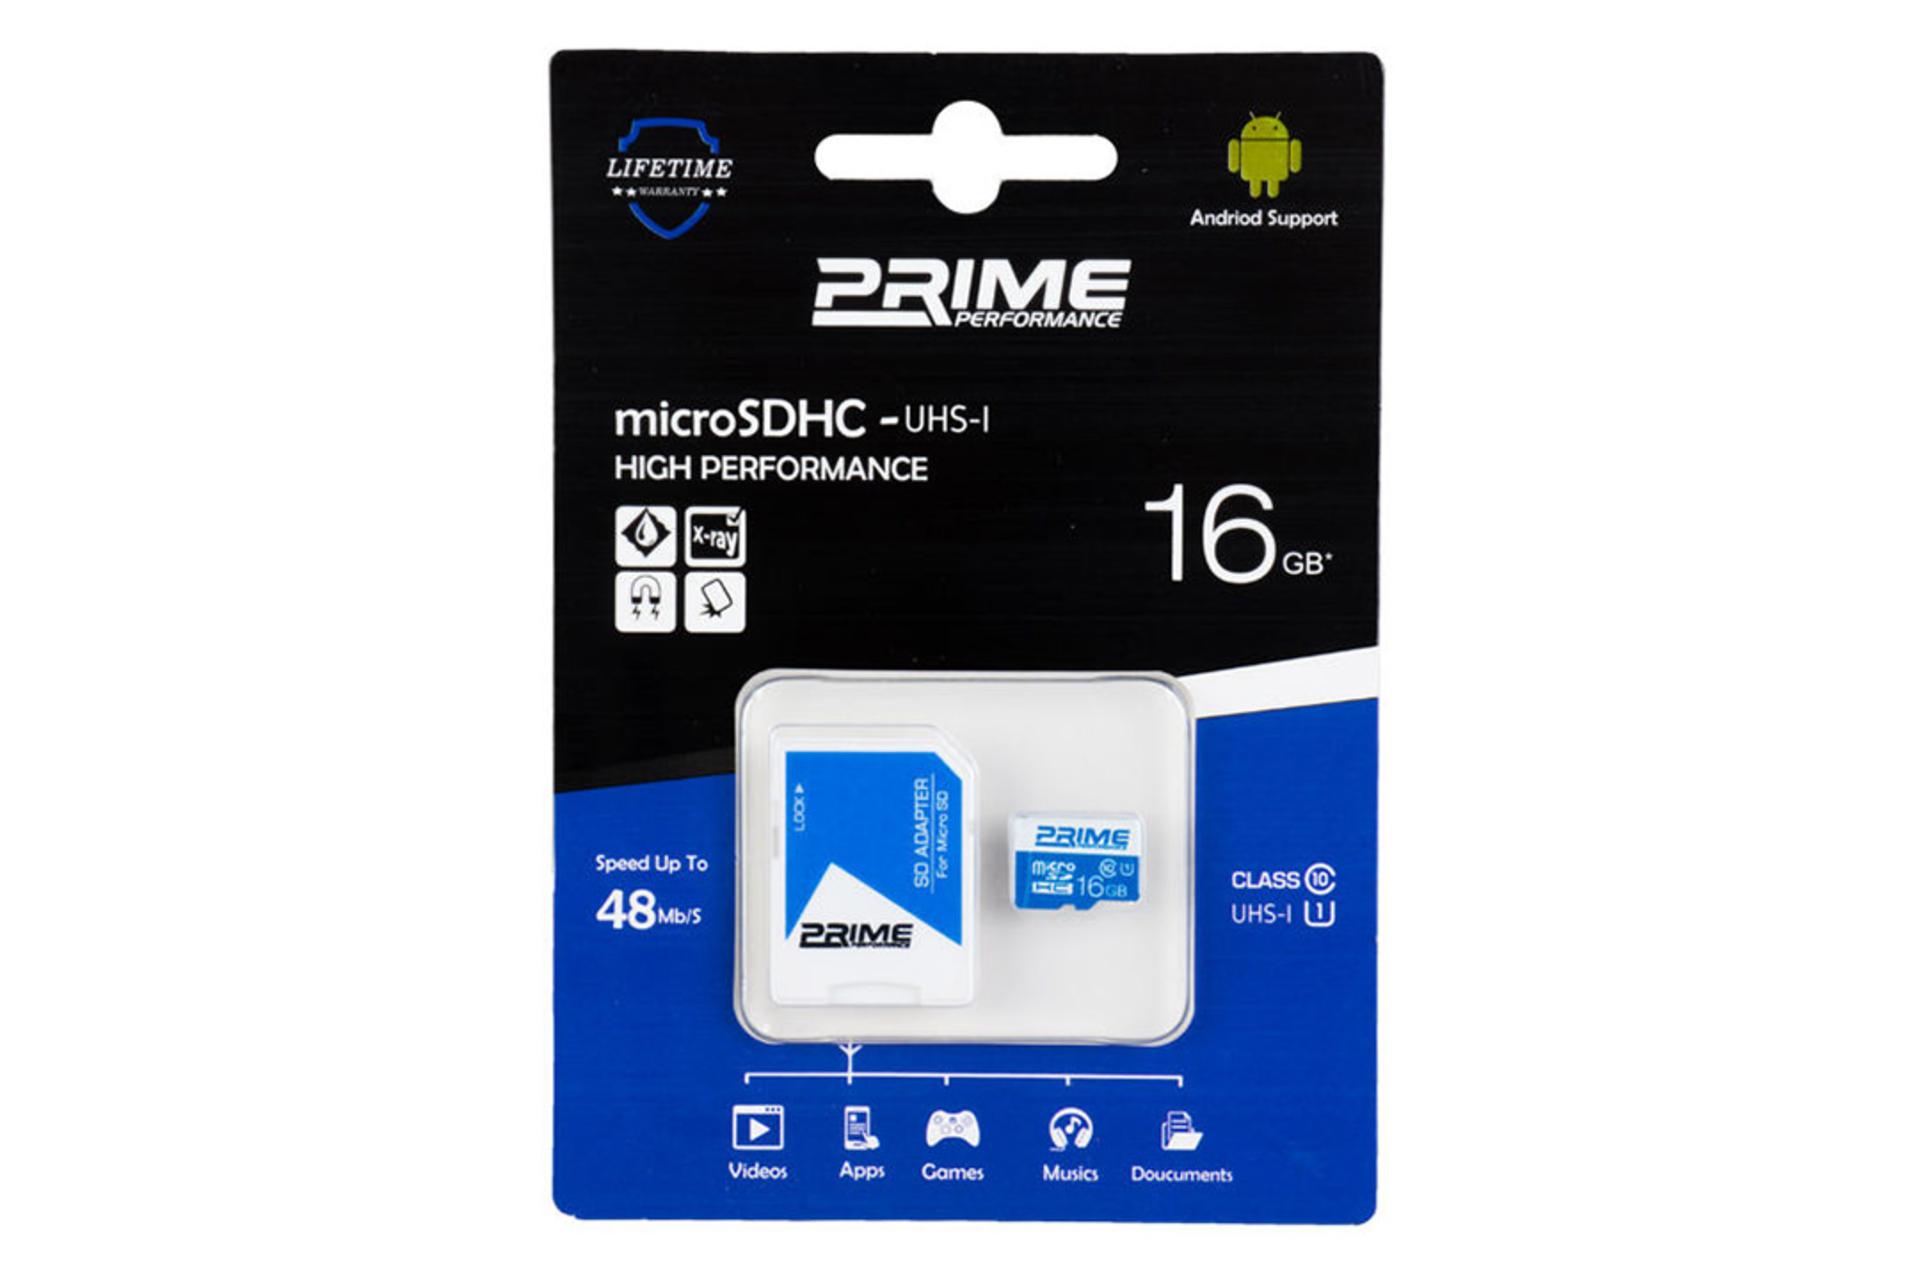 Prime microSDHC Class 10 UHS-I U1 16GB